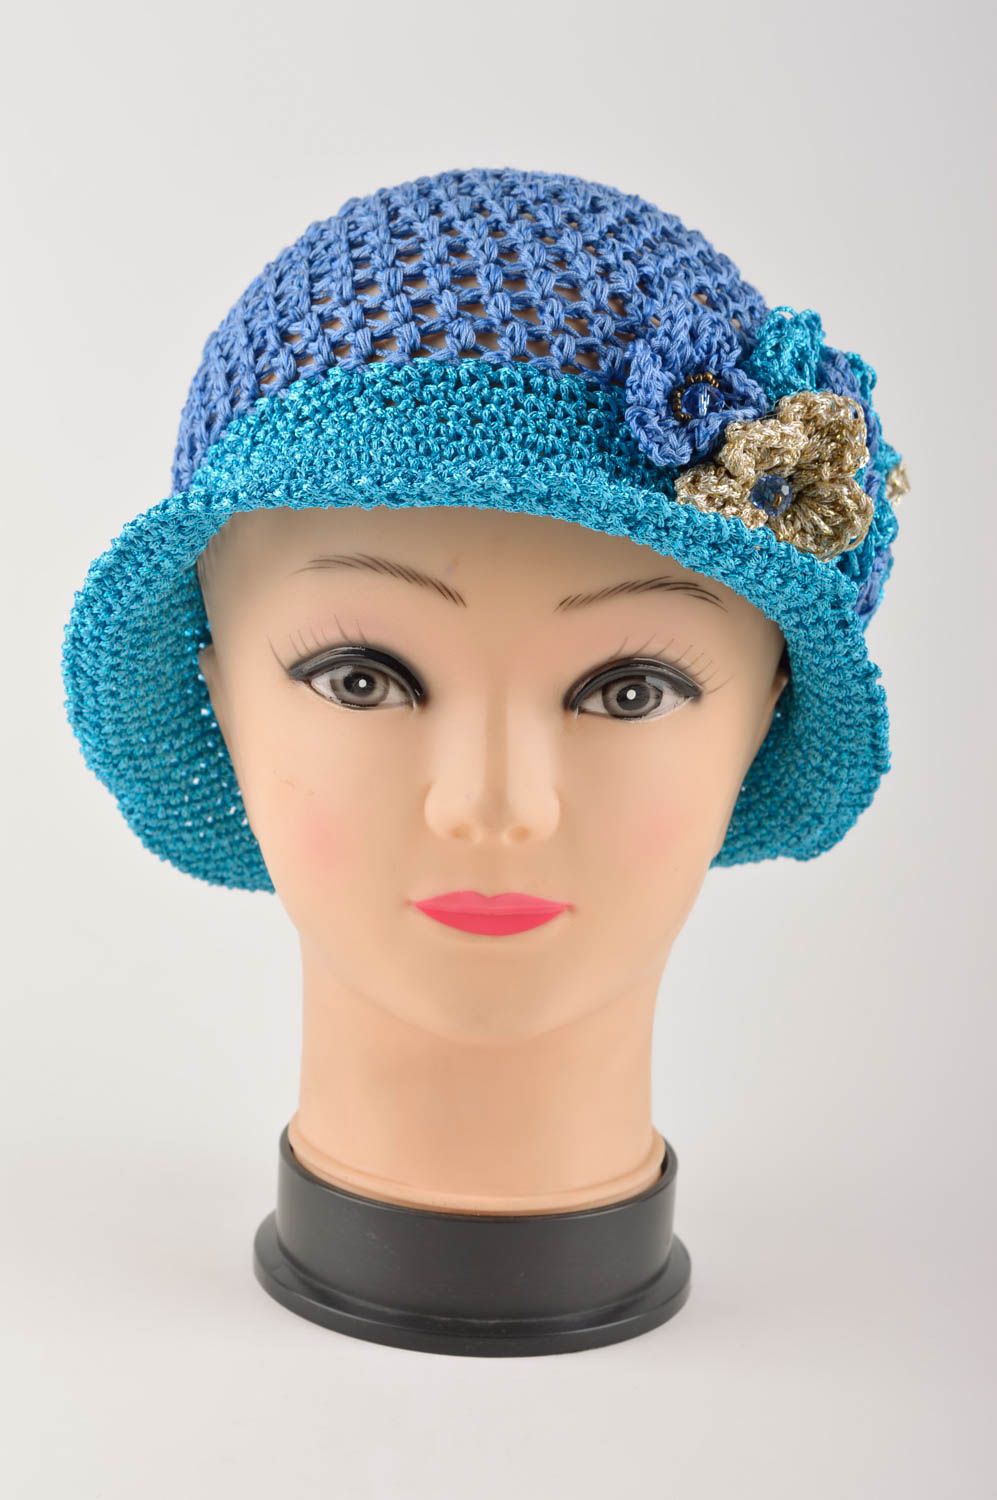 Handmade crochet hat summer hat ladies sun hats designer accessories gift ideas photo 3